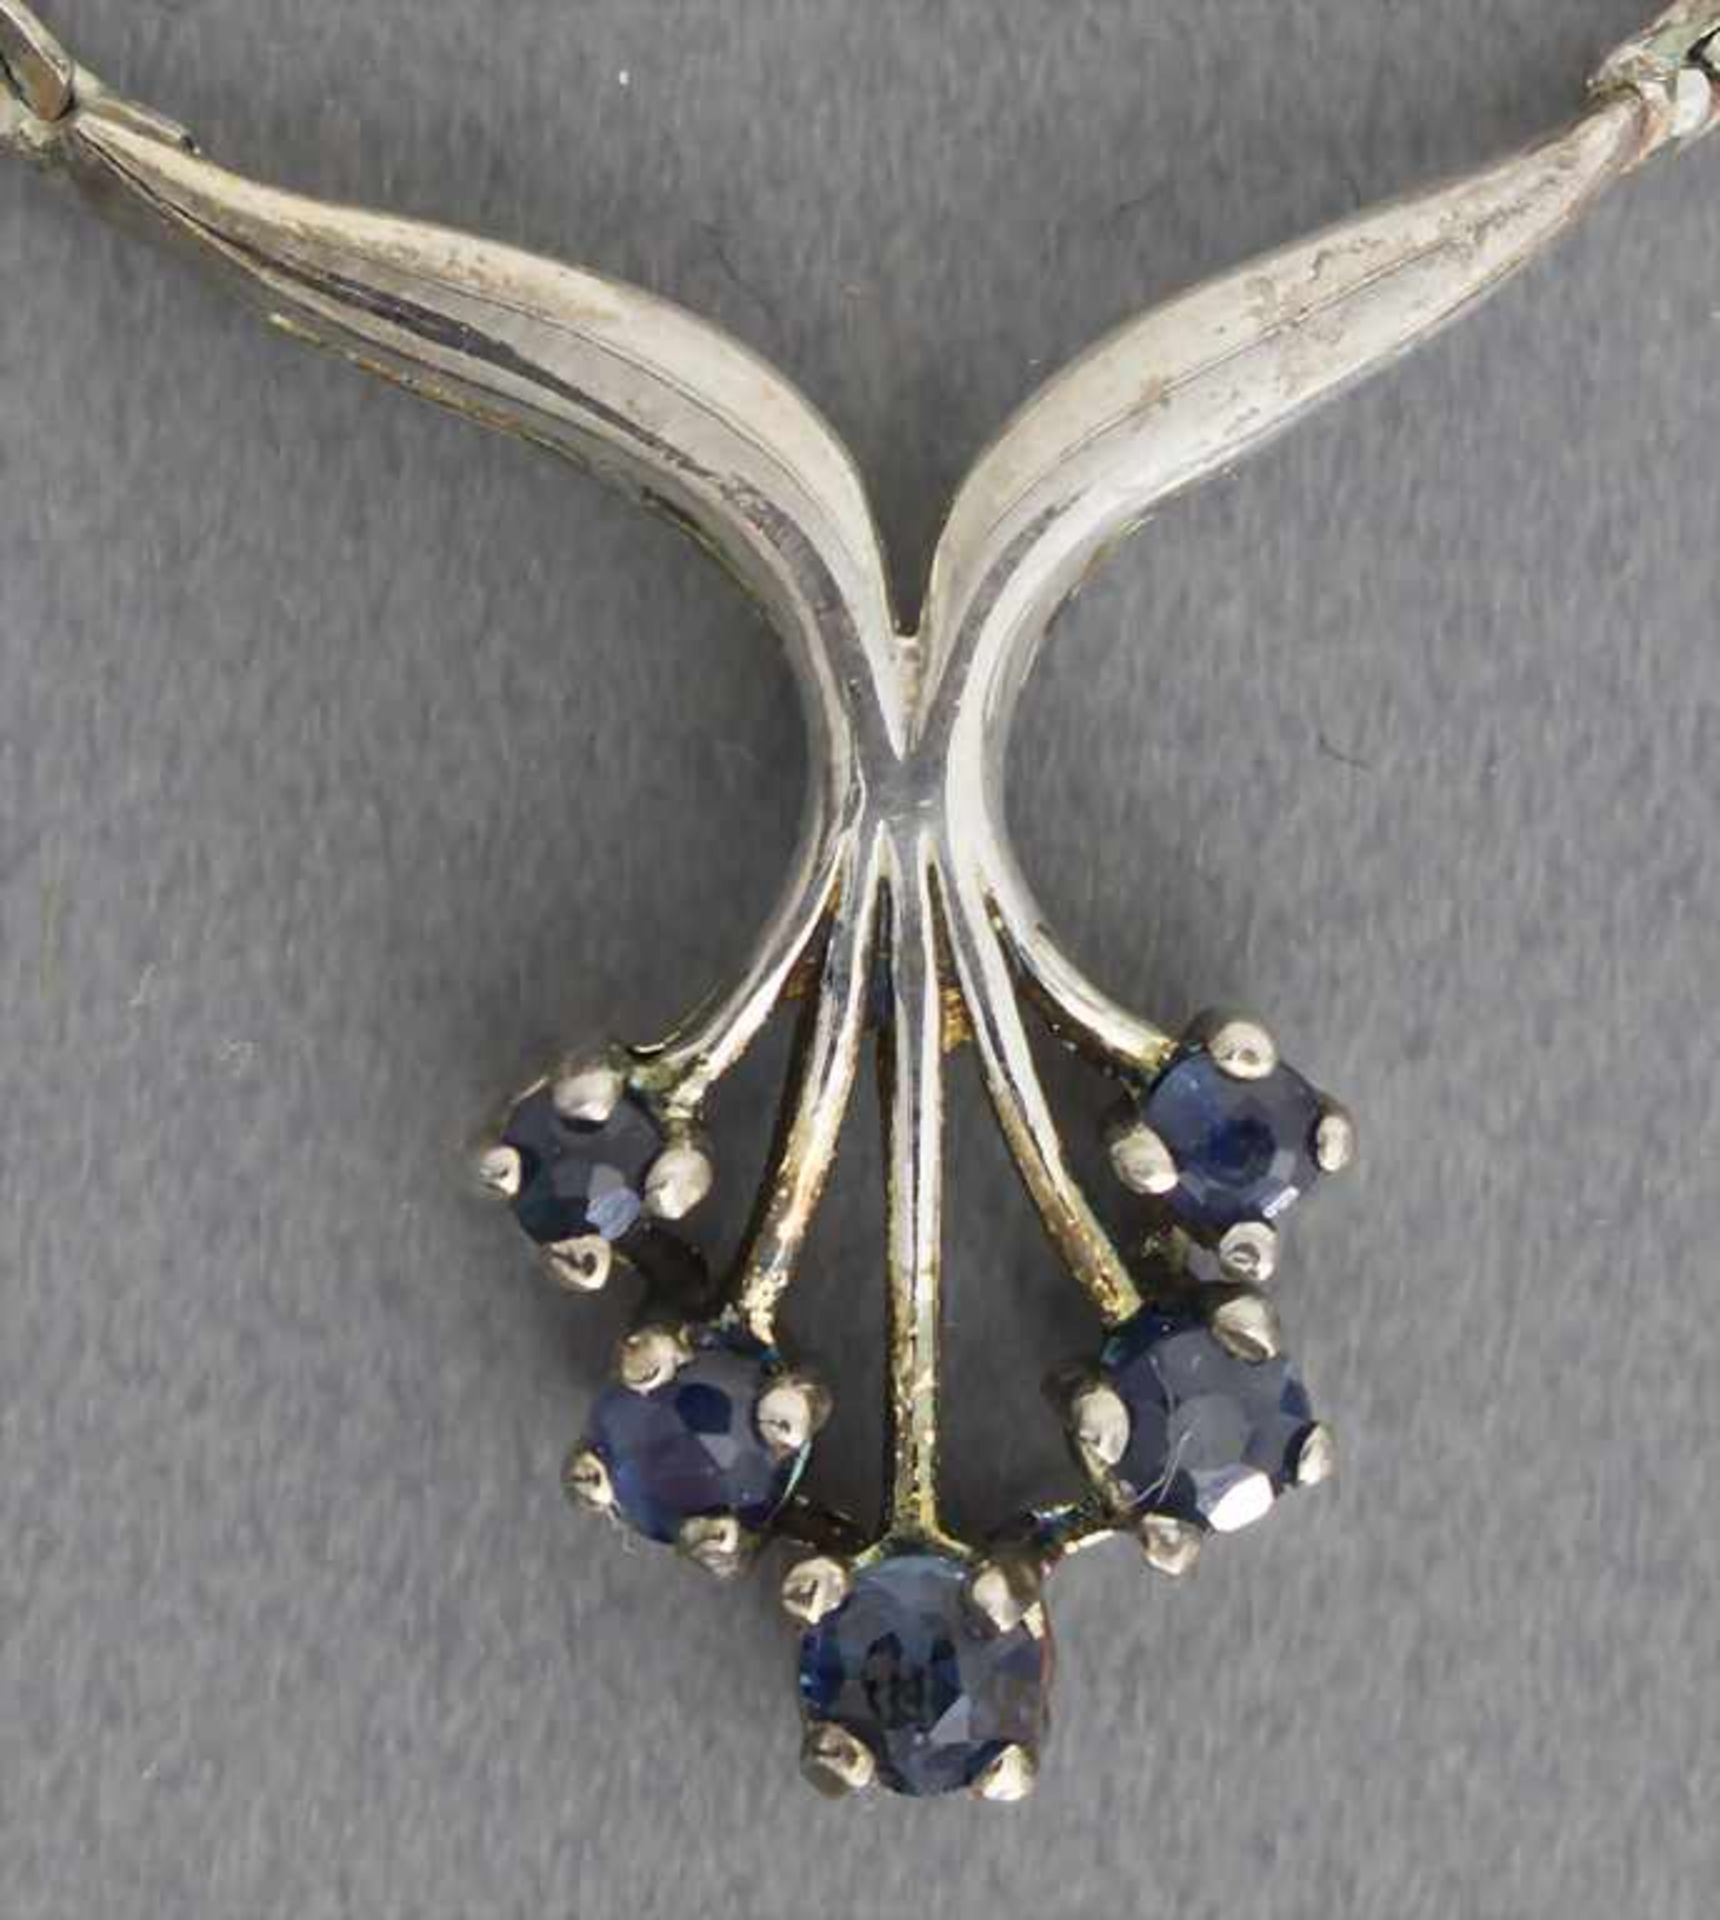 Silber-Collier / A silver necklace, um 1970Material: Silber Ag 925/000, 5 blaue Farbsteine,